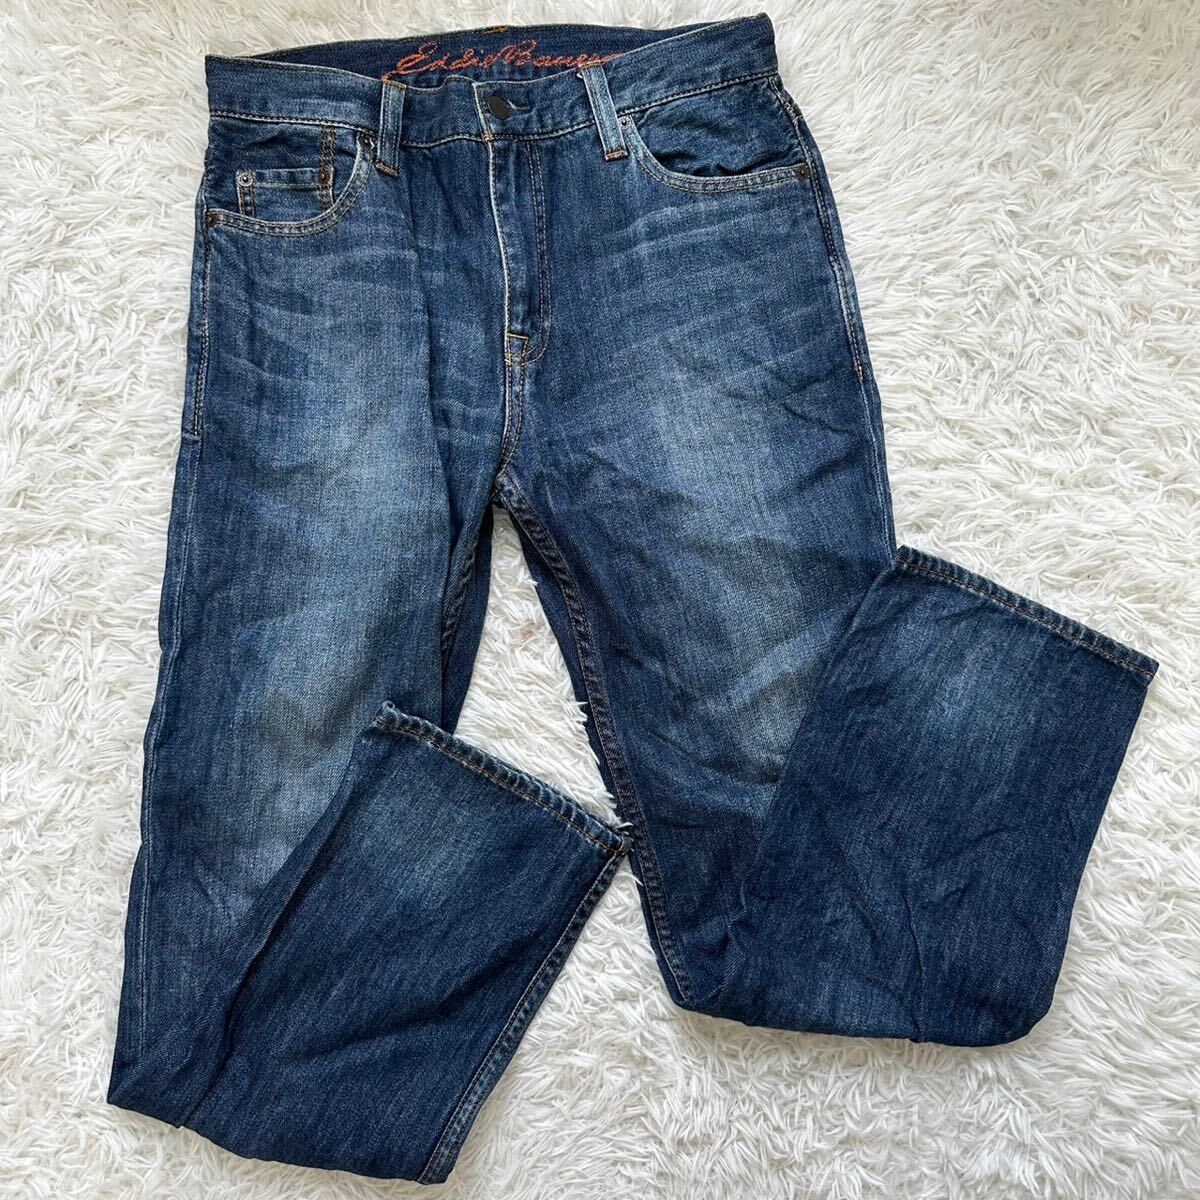 Джинсы джинсы брюки Edy Bauer W30